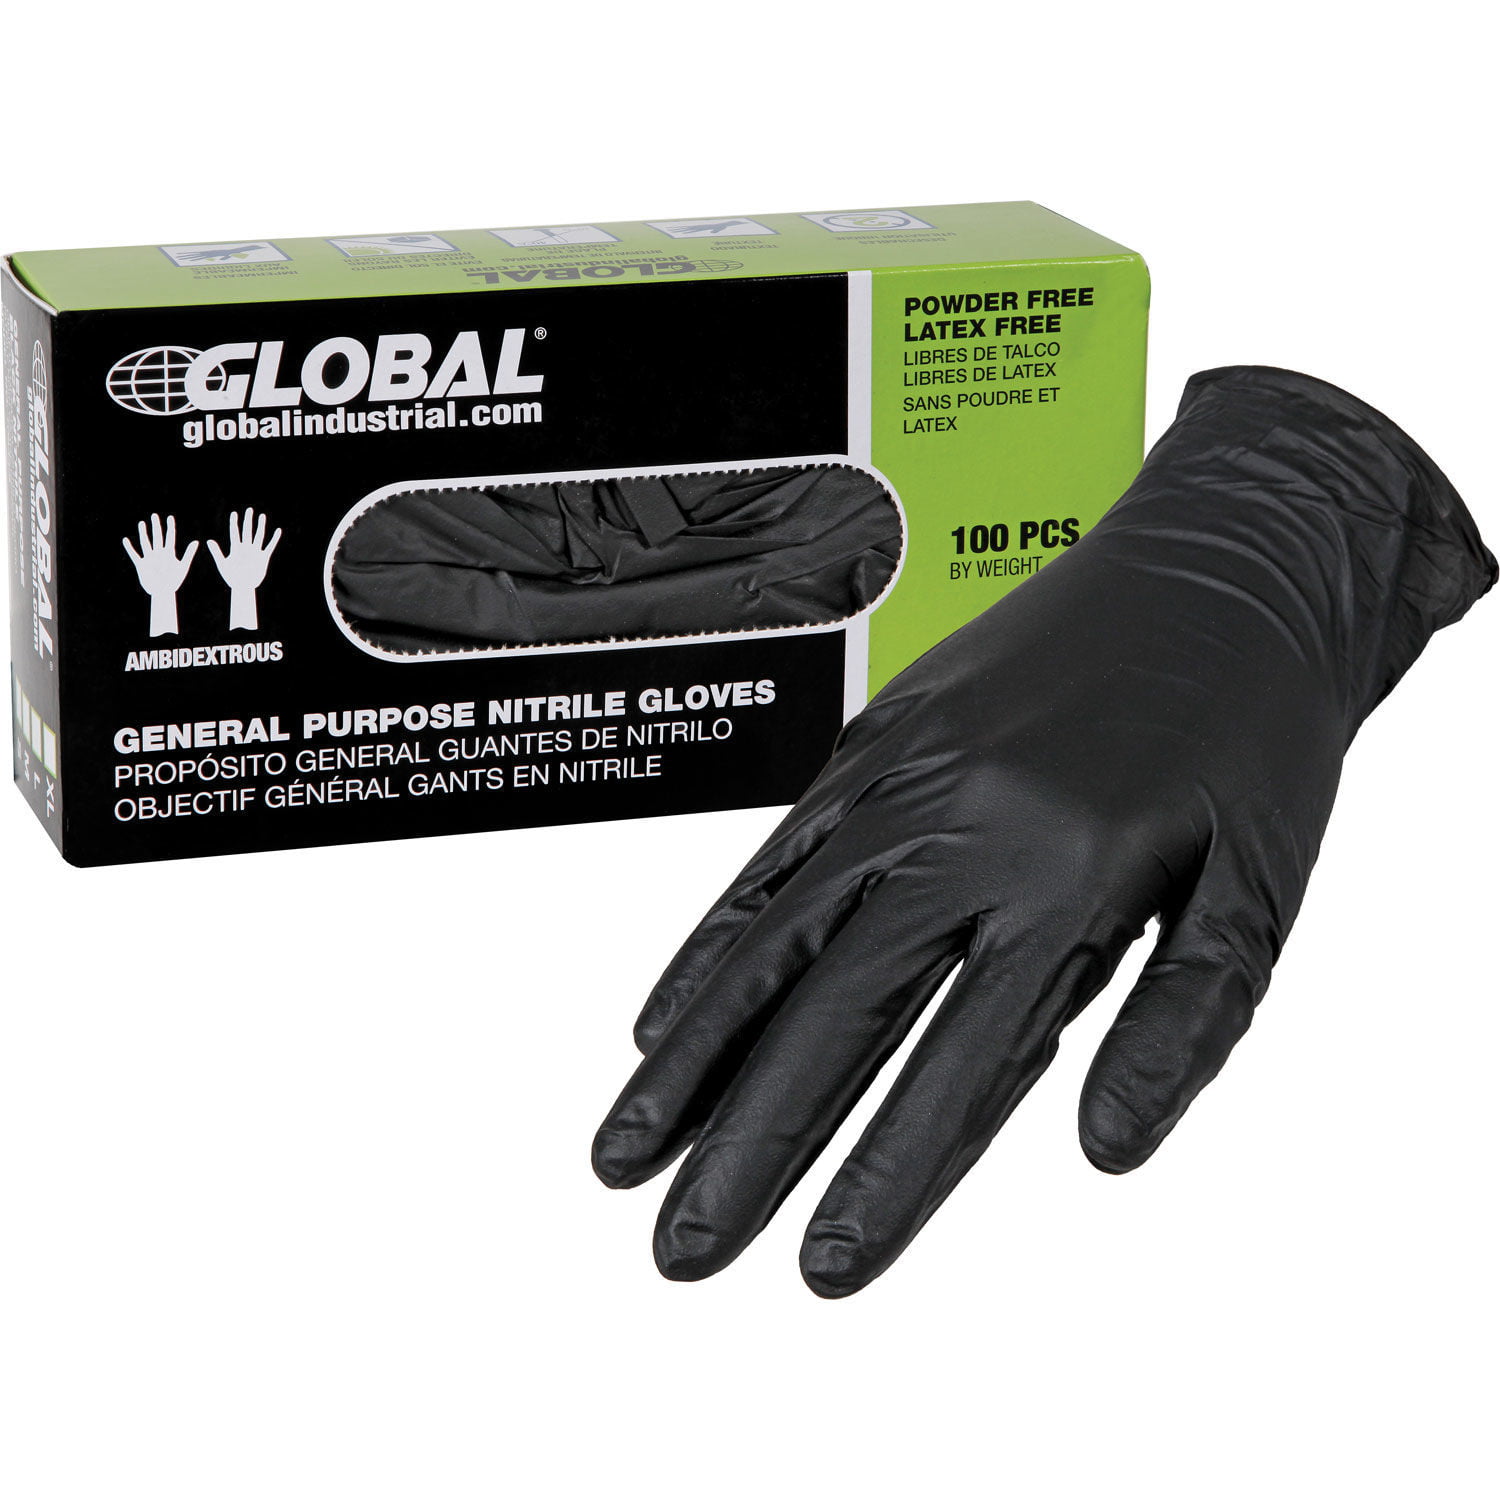 Powder Free- Heavy Duty Nitrile Gloves 100 pcs Black X Large Size 6 Mil Thick 